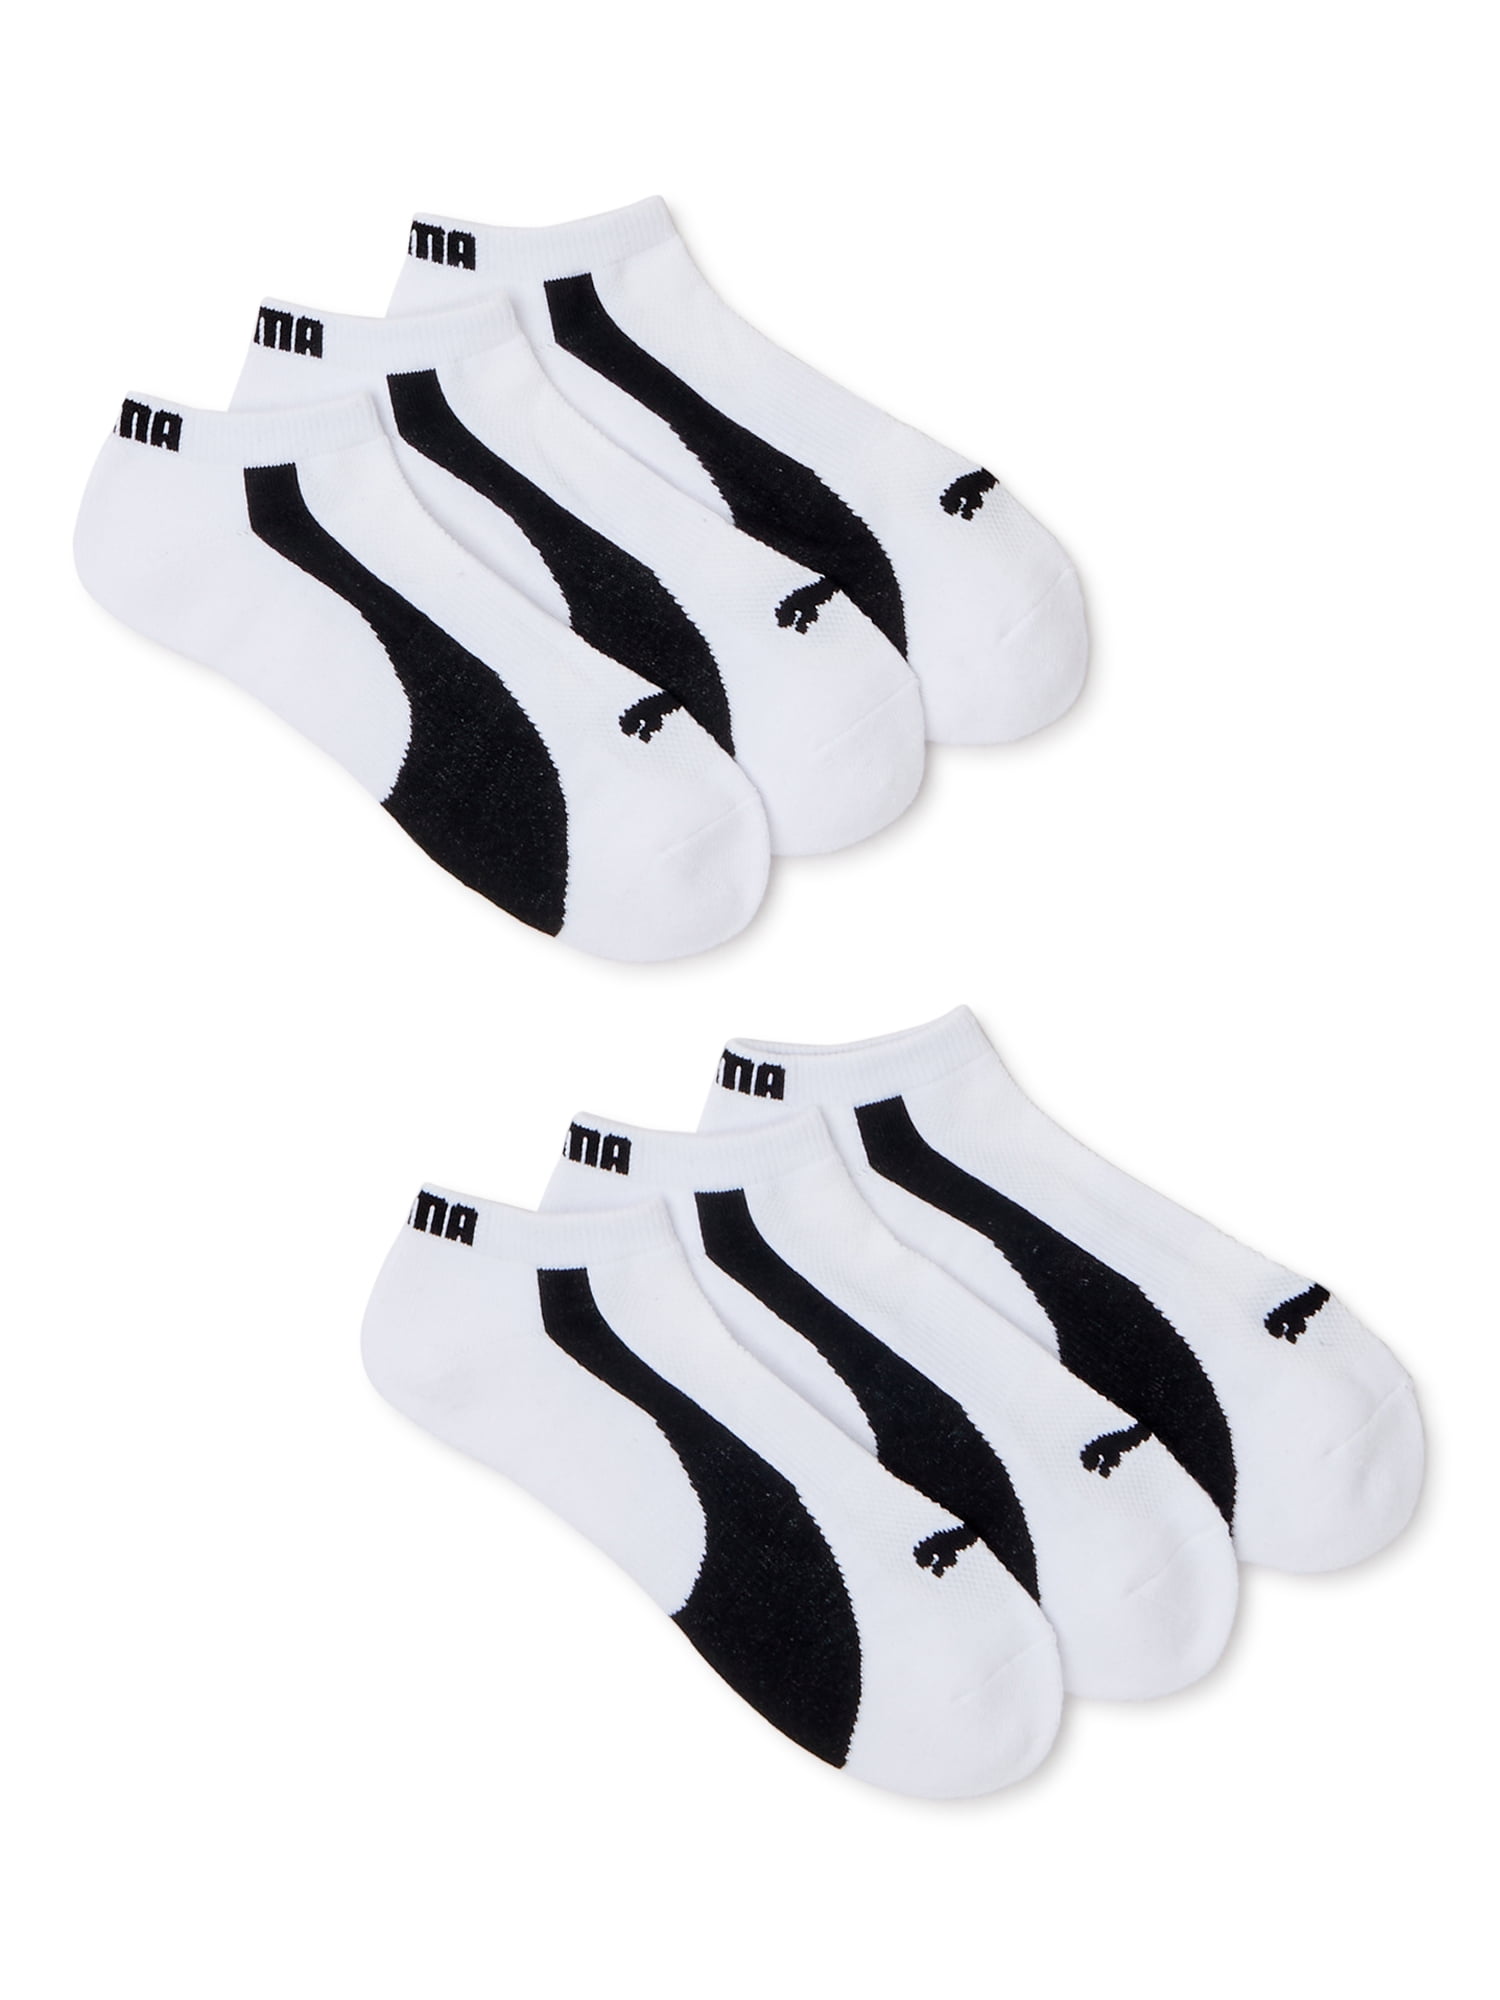 PUMA Men's Low Cut Socks, 6-Pack - Walmart.com